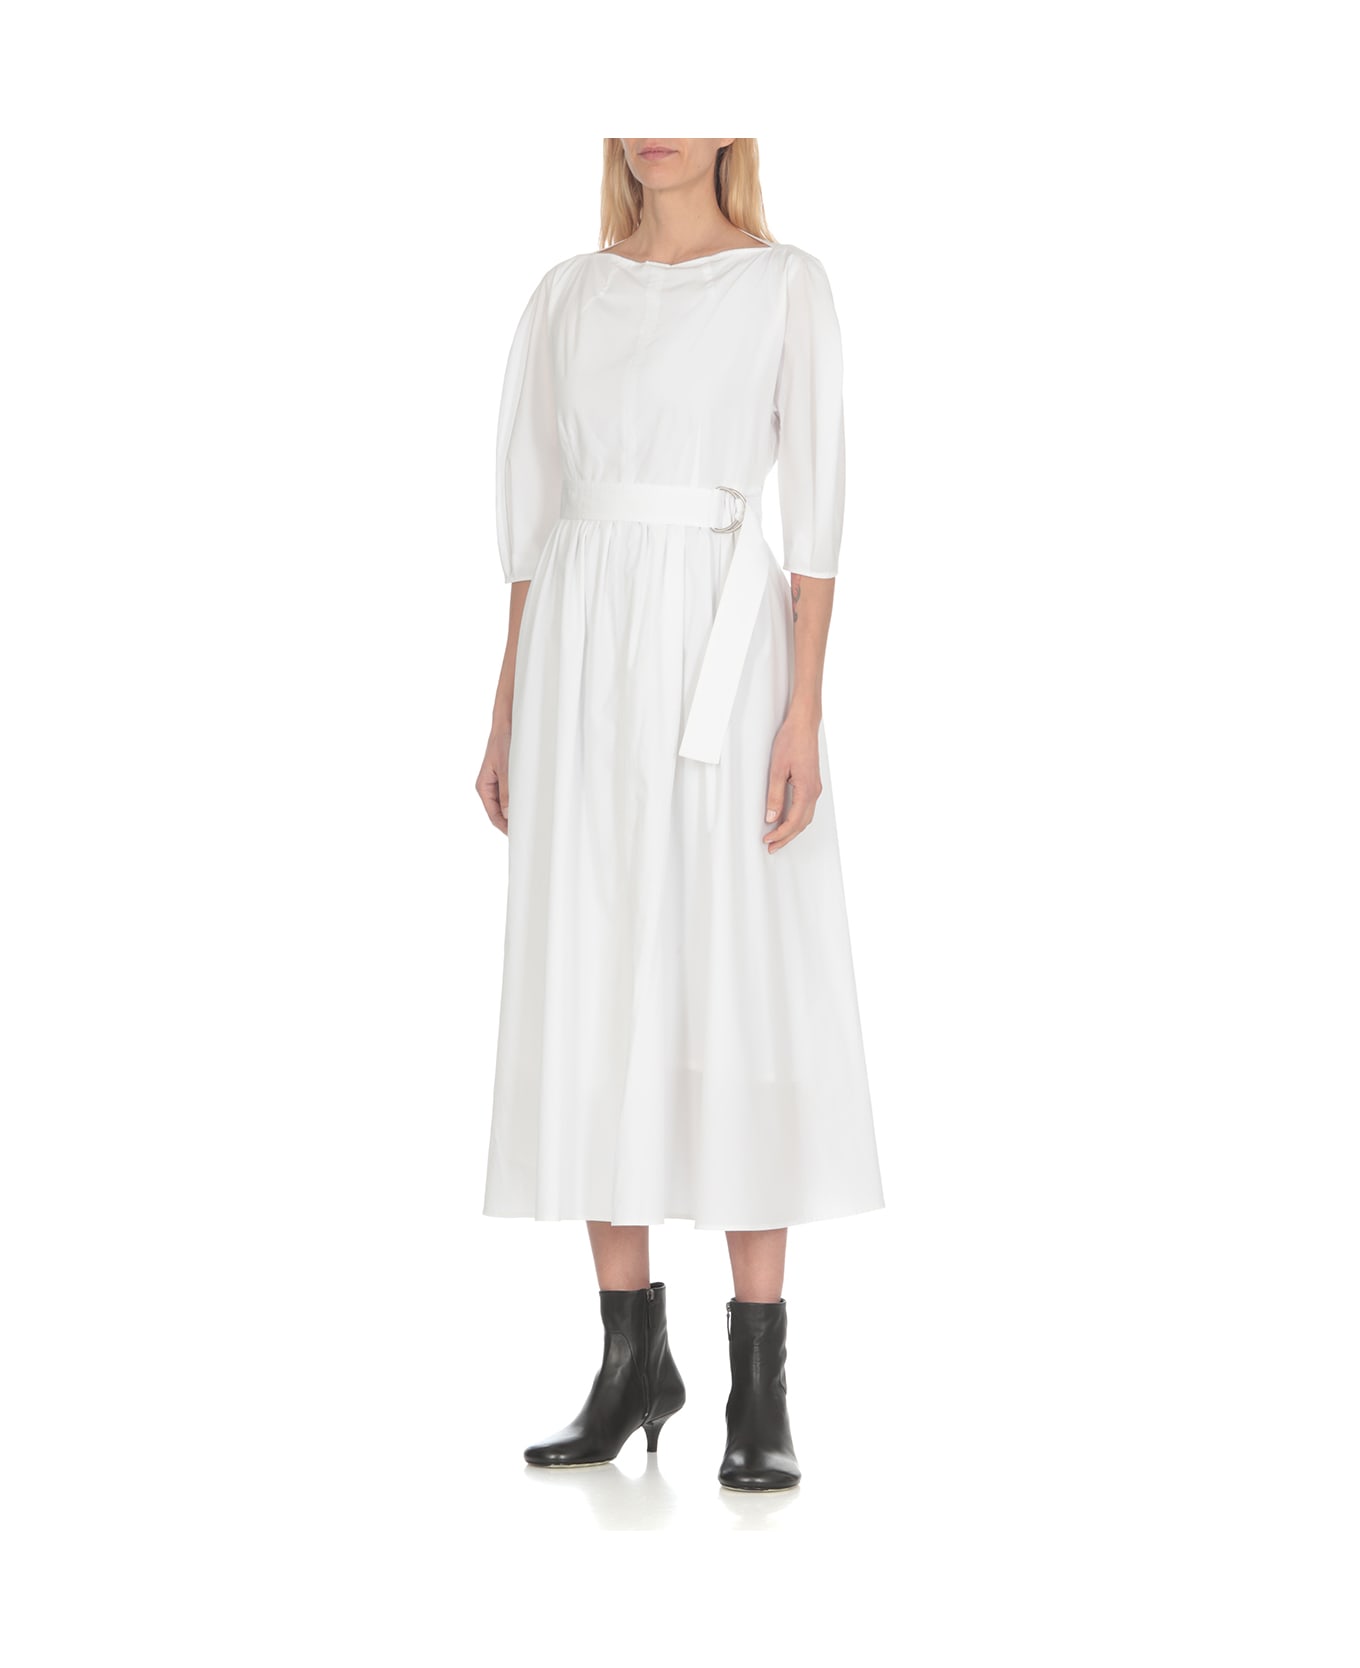 Y's Cotton Dress - White